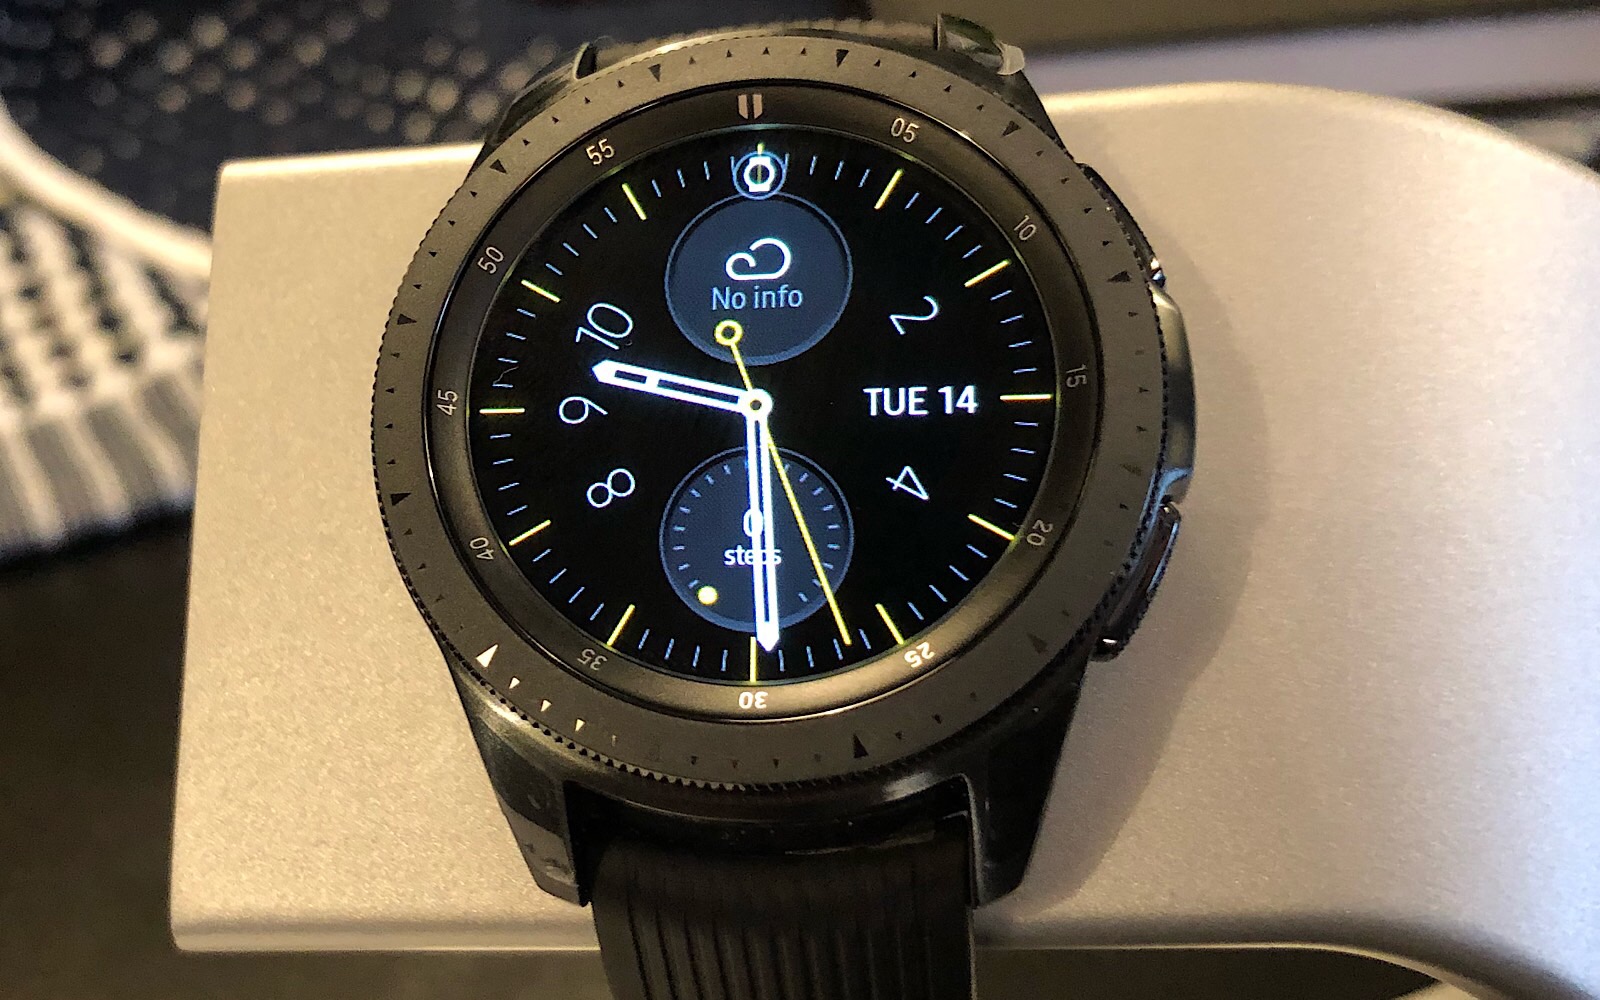 Samsung's Galaxy Watch